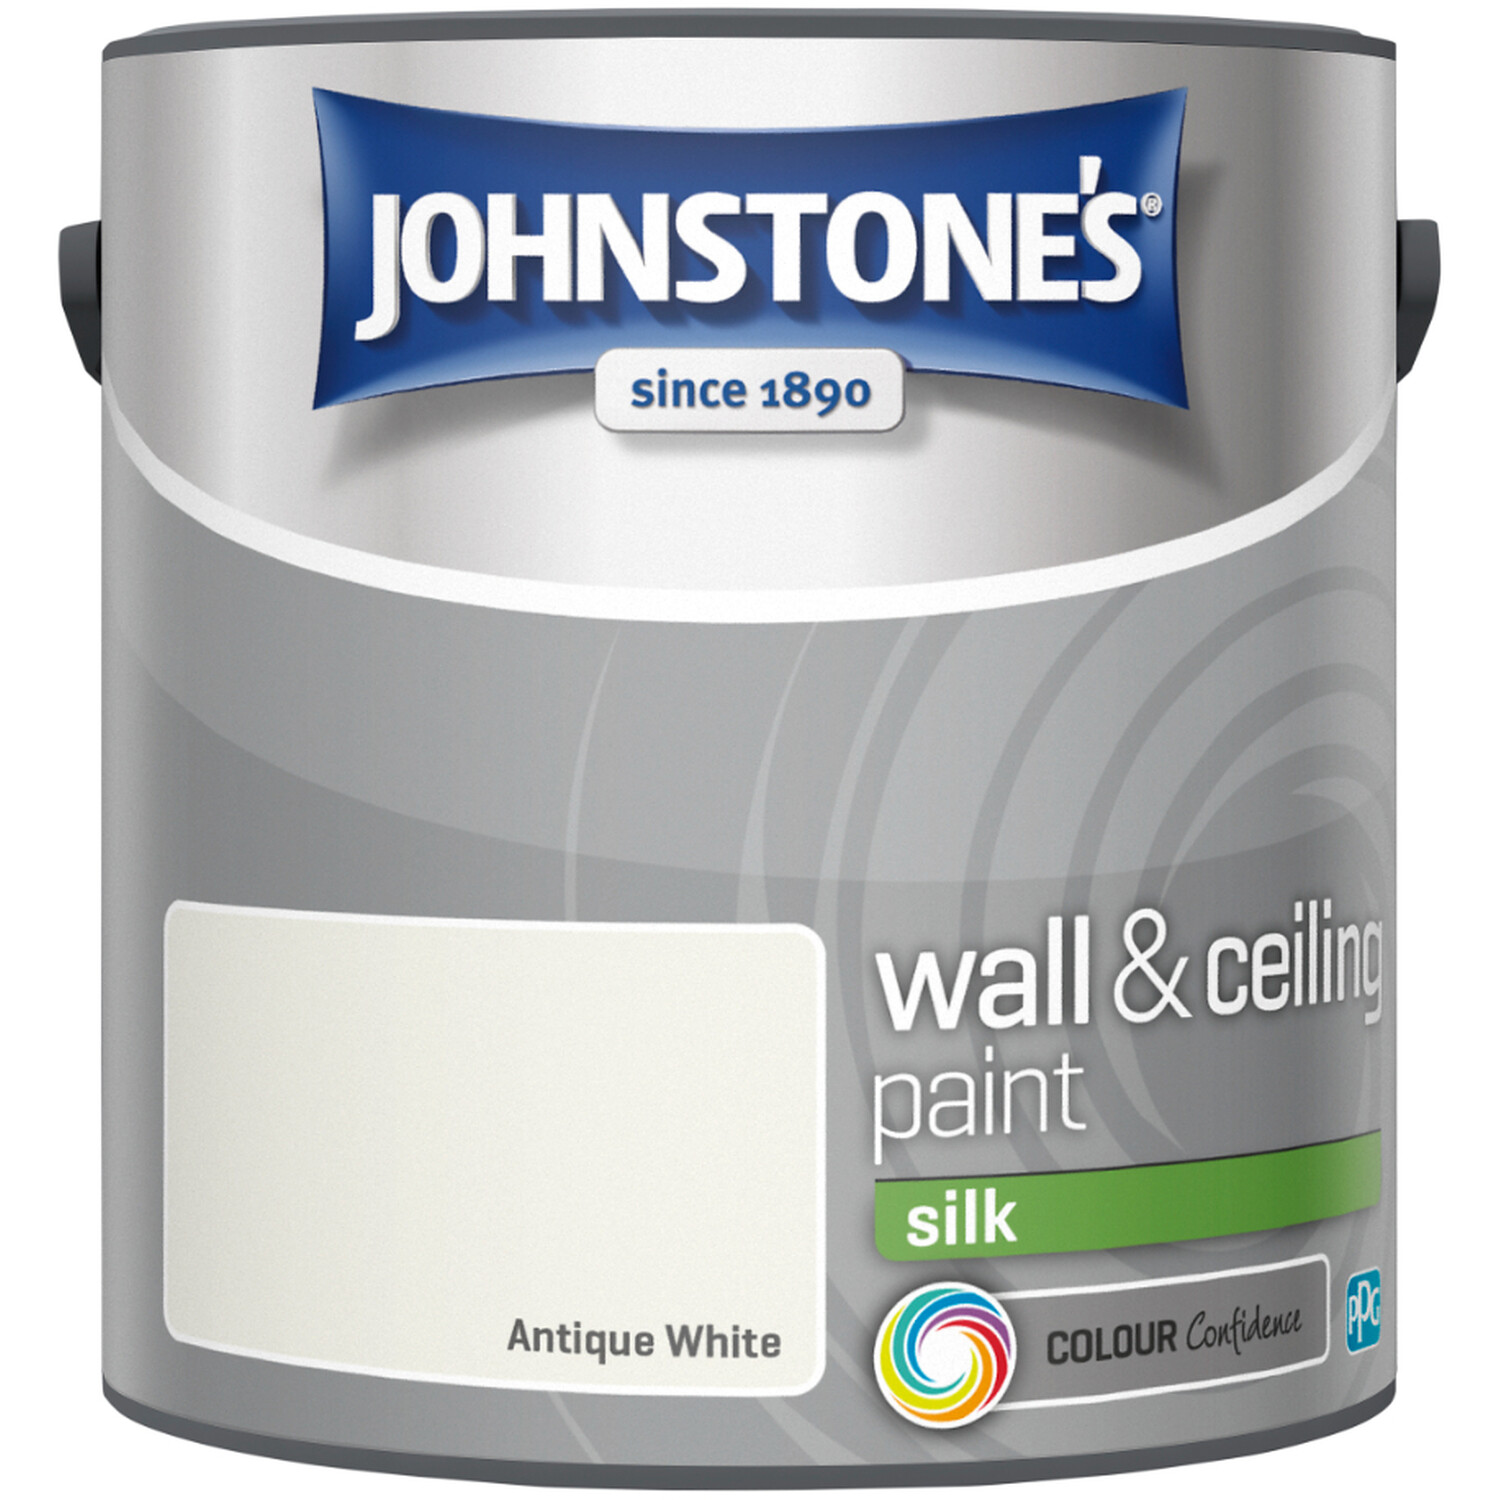 Johnstones Silk Emulsion Paint - Antique White Image 2